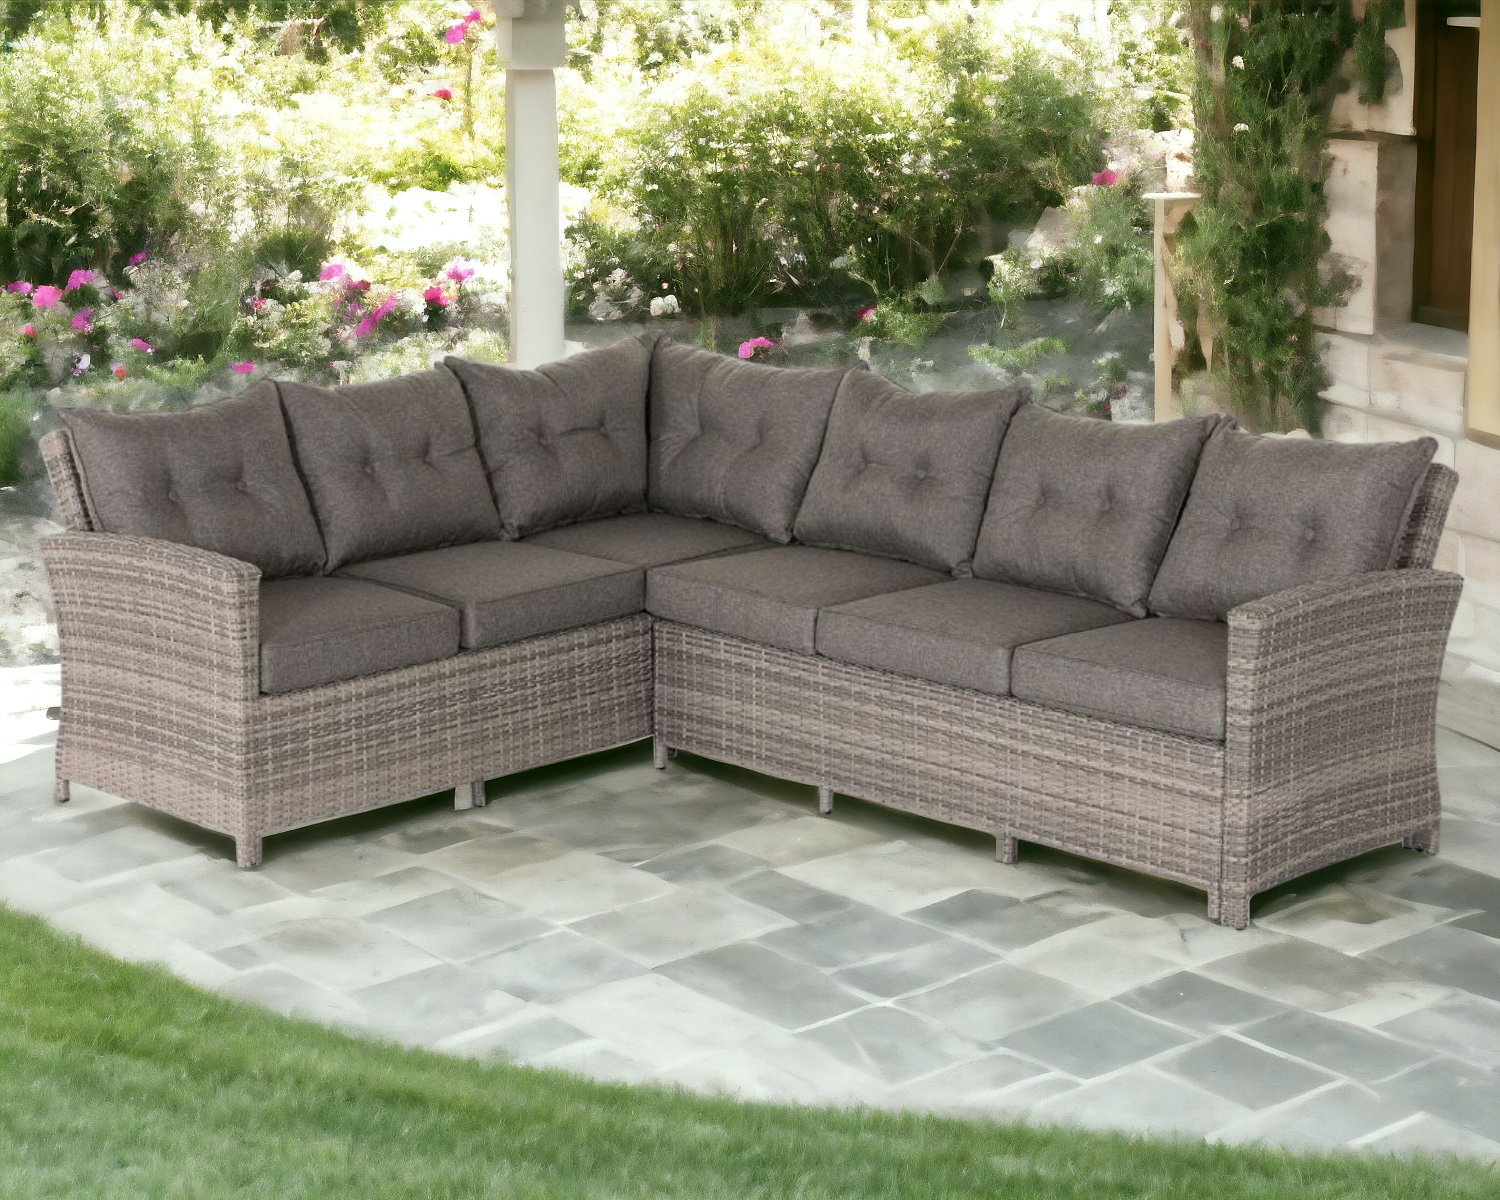 Sorrento Rattan Garden Corner Sofa In Grey With Grey Cushions Sorrento Rattan Direct